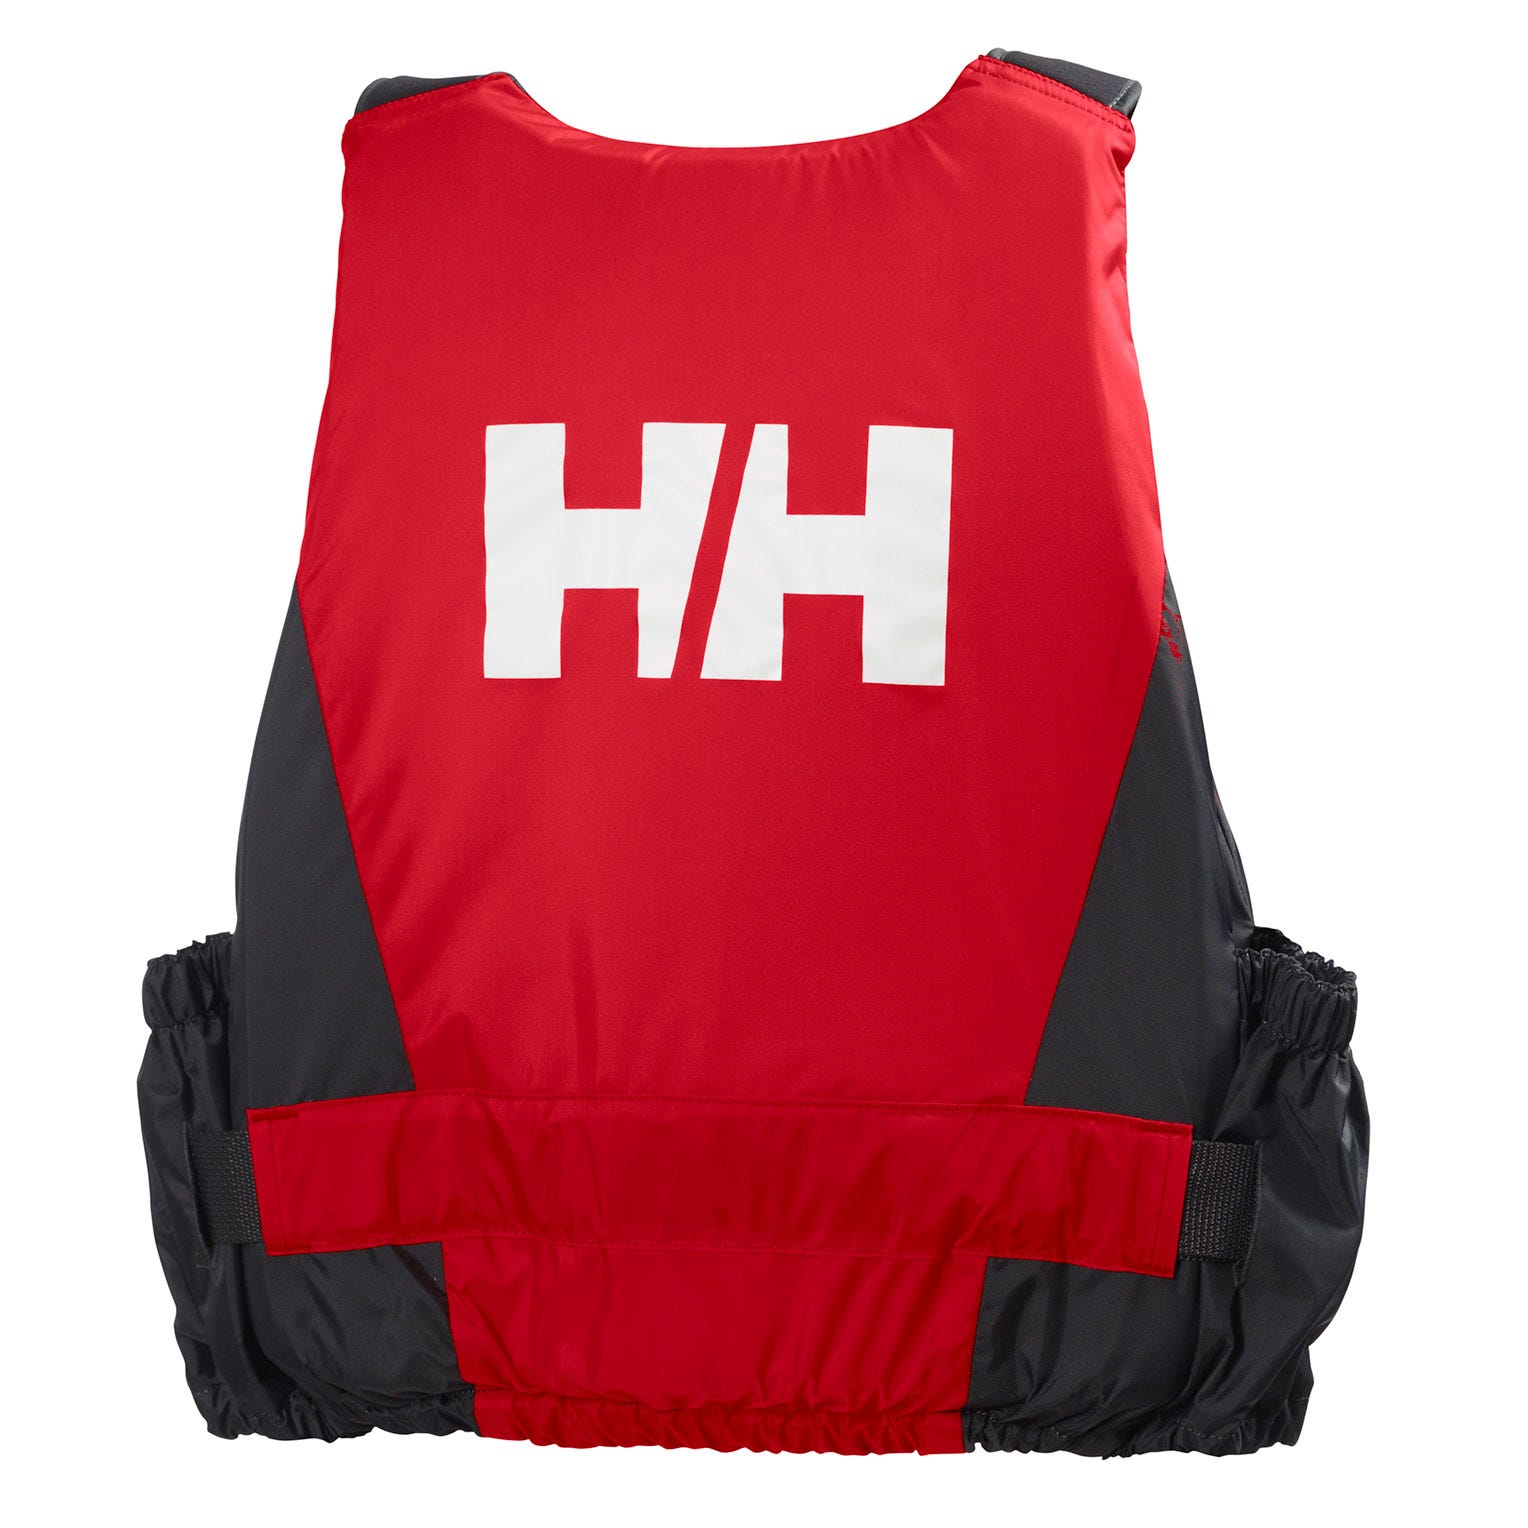 Helly Hansen Rider Life Vest Buoyancy Aid | Helly Hansen | Portwest - The Outdoor Shop